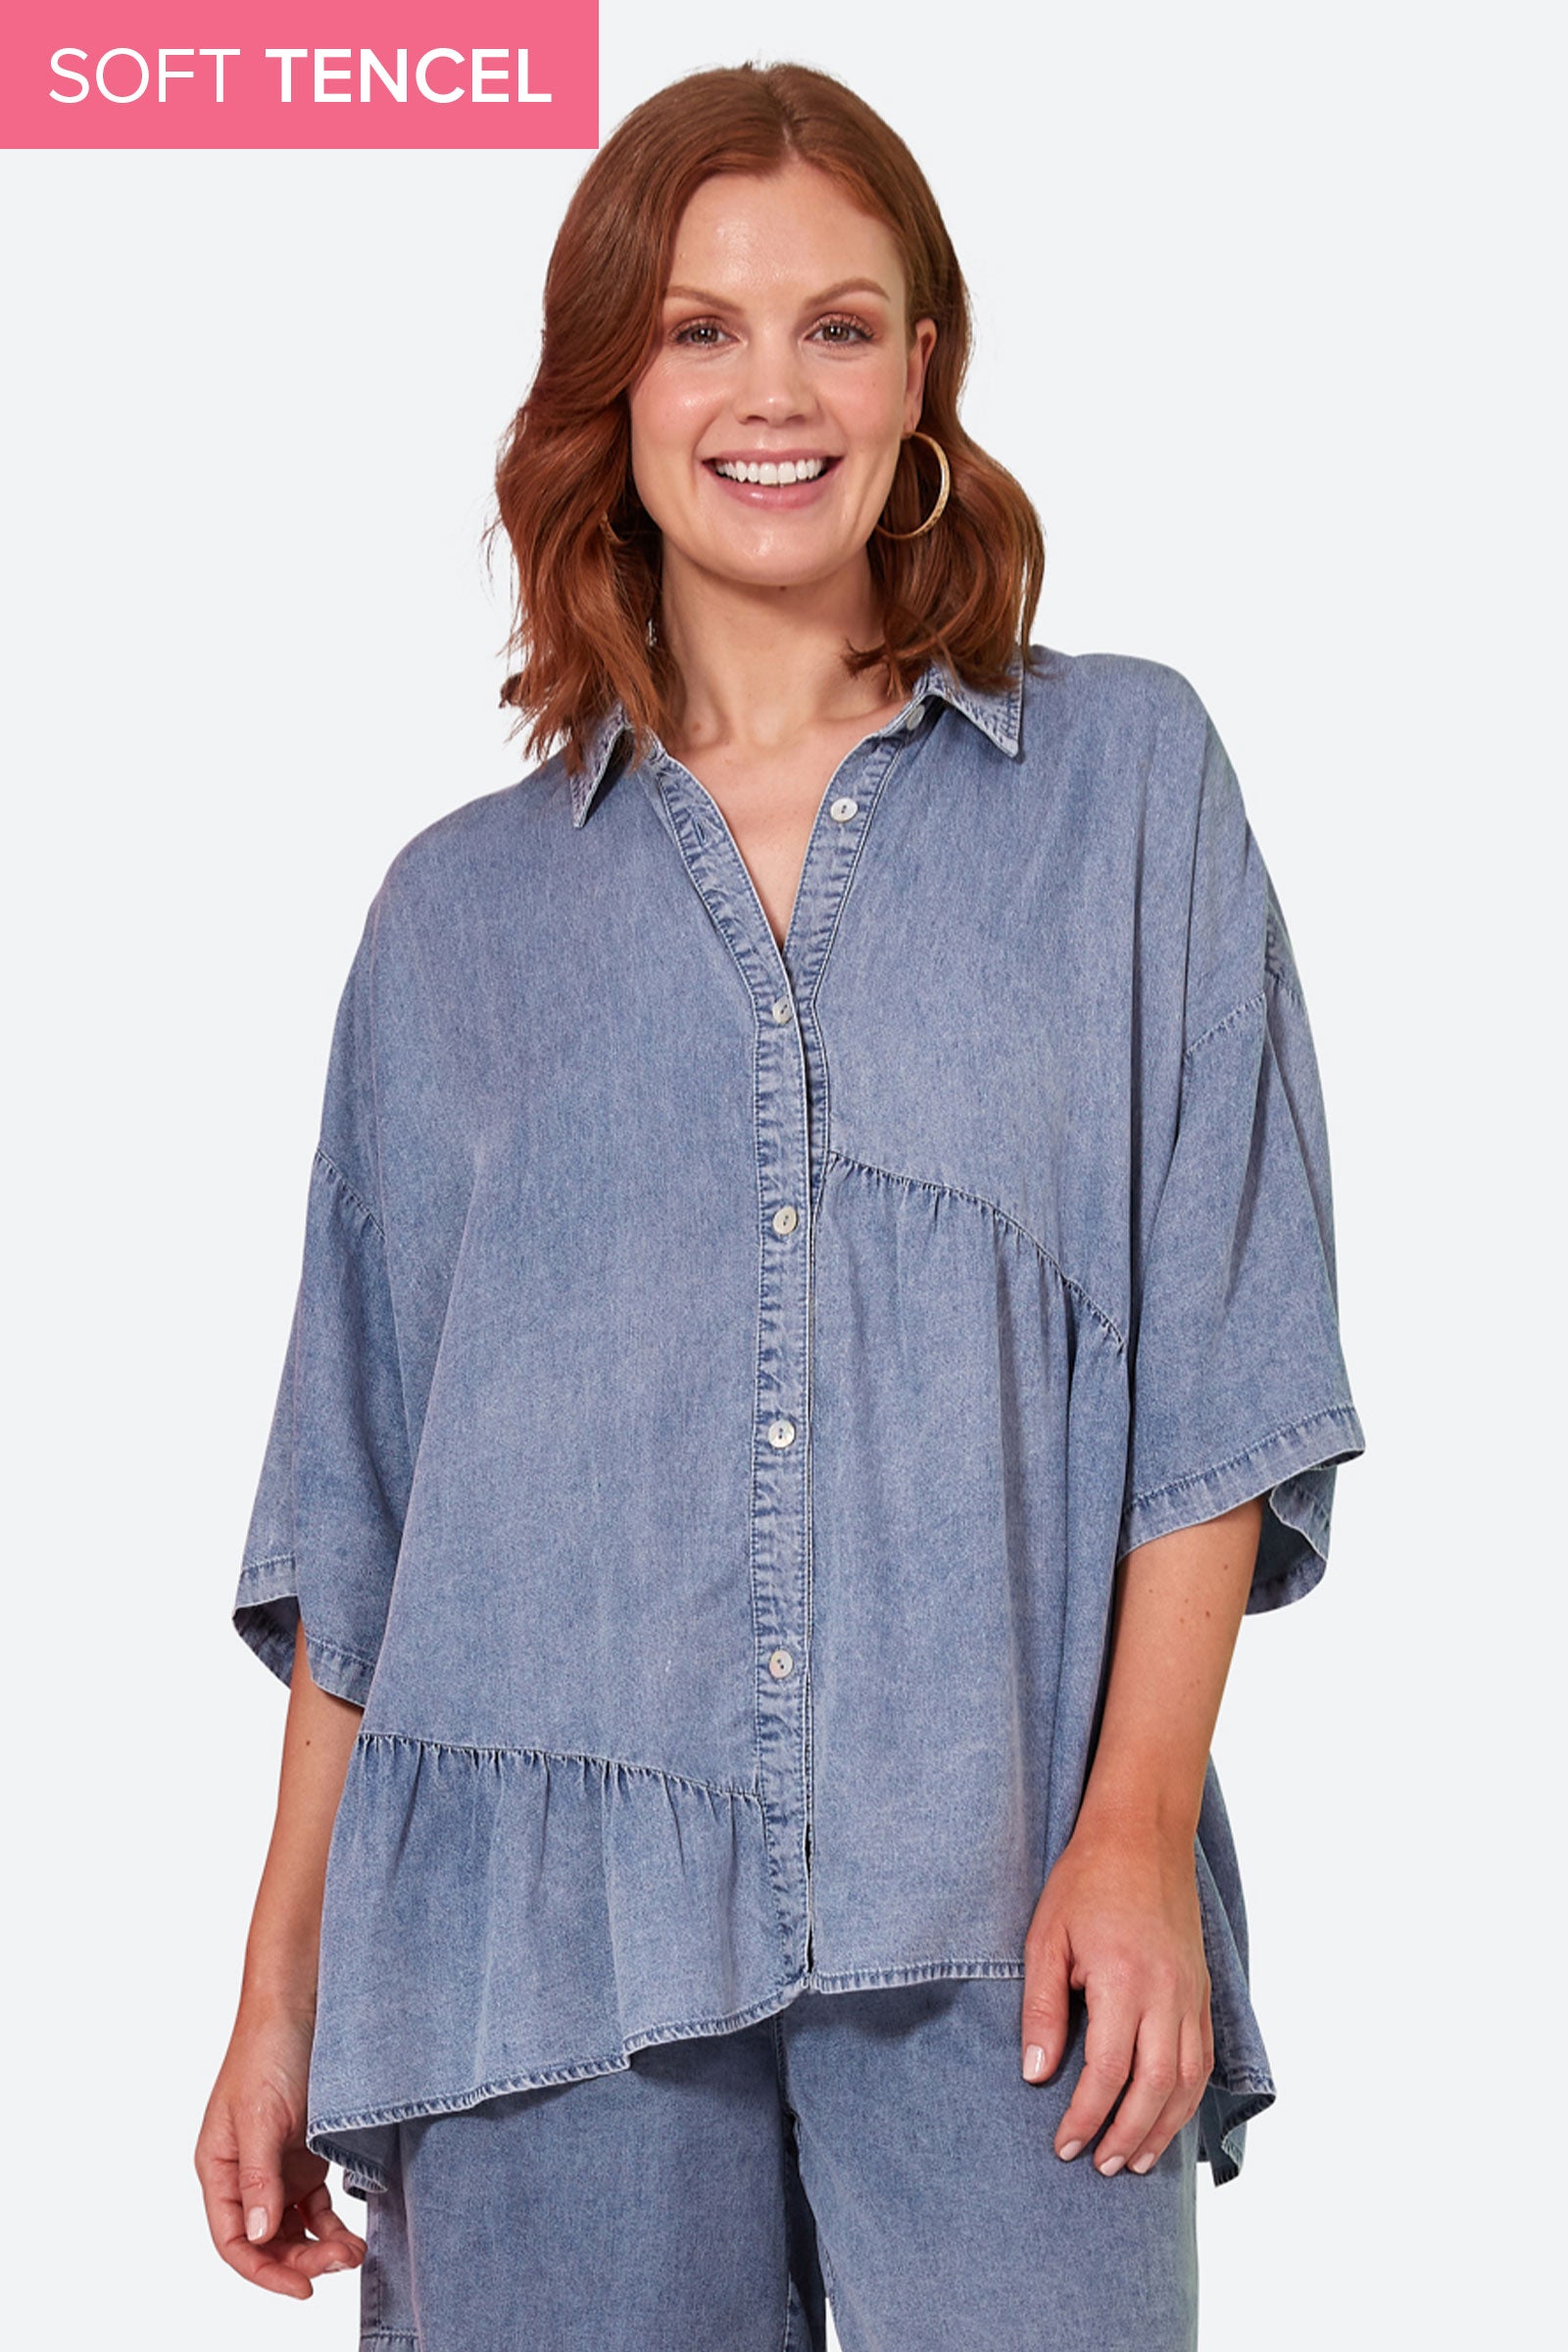 Elan Shirt - Denim - eb&ive Clothing - Shirt One Size